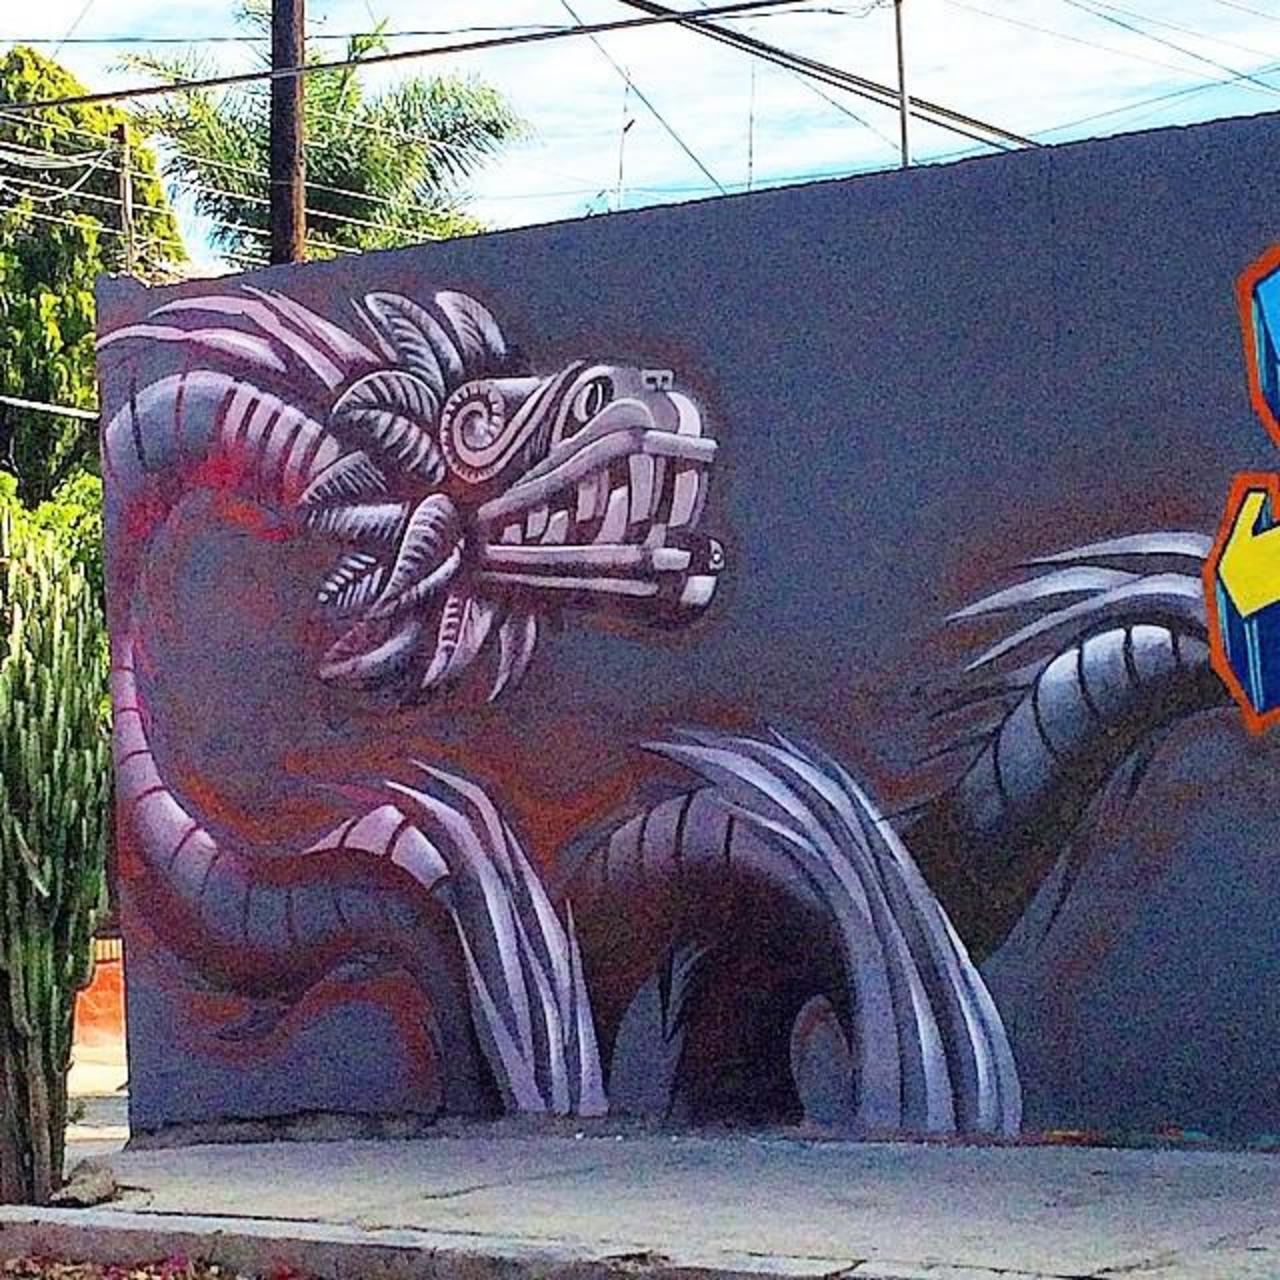 #quetzalcoatl #serpienteemplumada #prehispanic #art #graffiti #mural #prehispanico #instagraffiti #instagraff #inst… http://t.co/kJfRoVeJhy